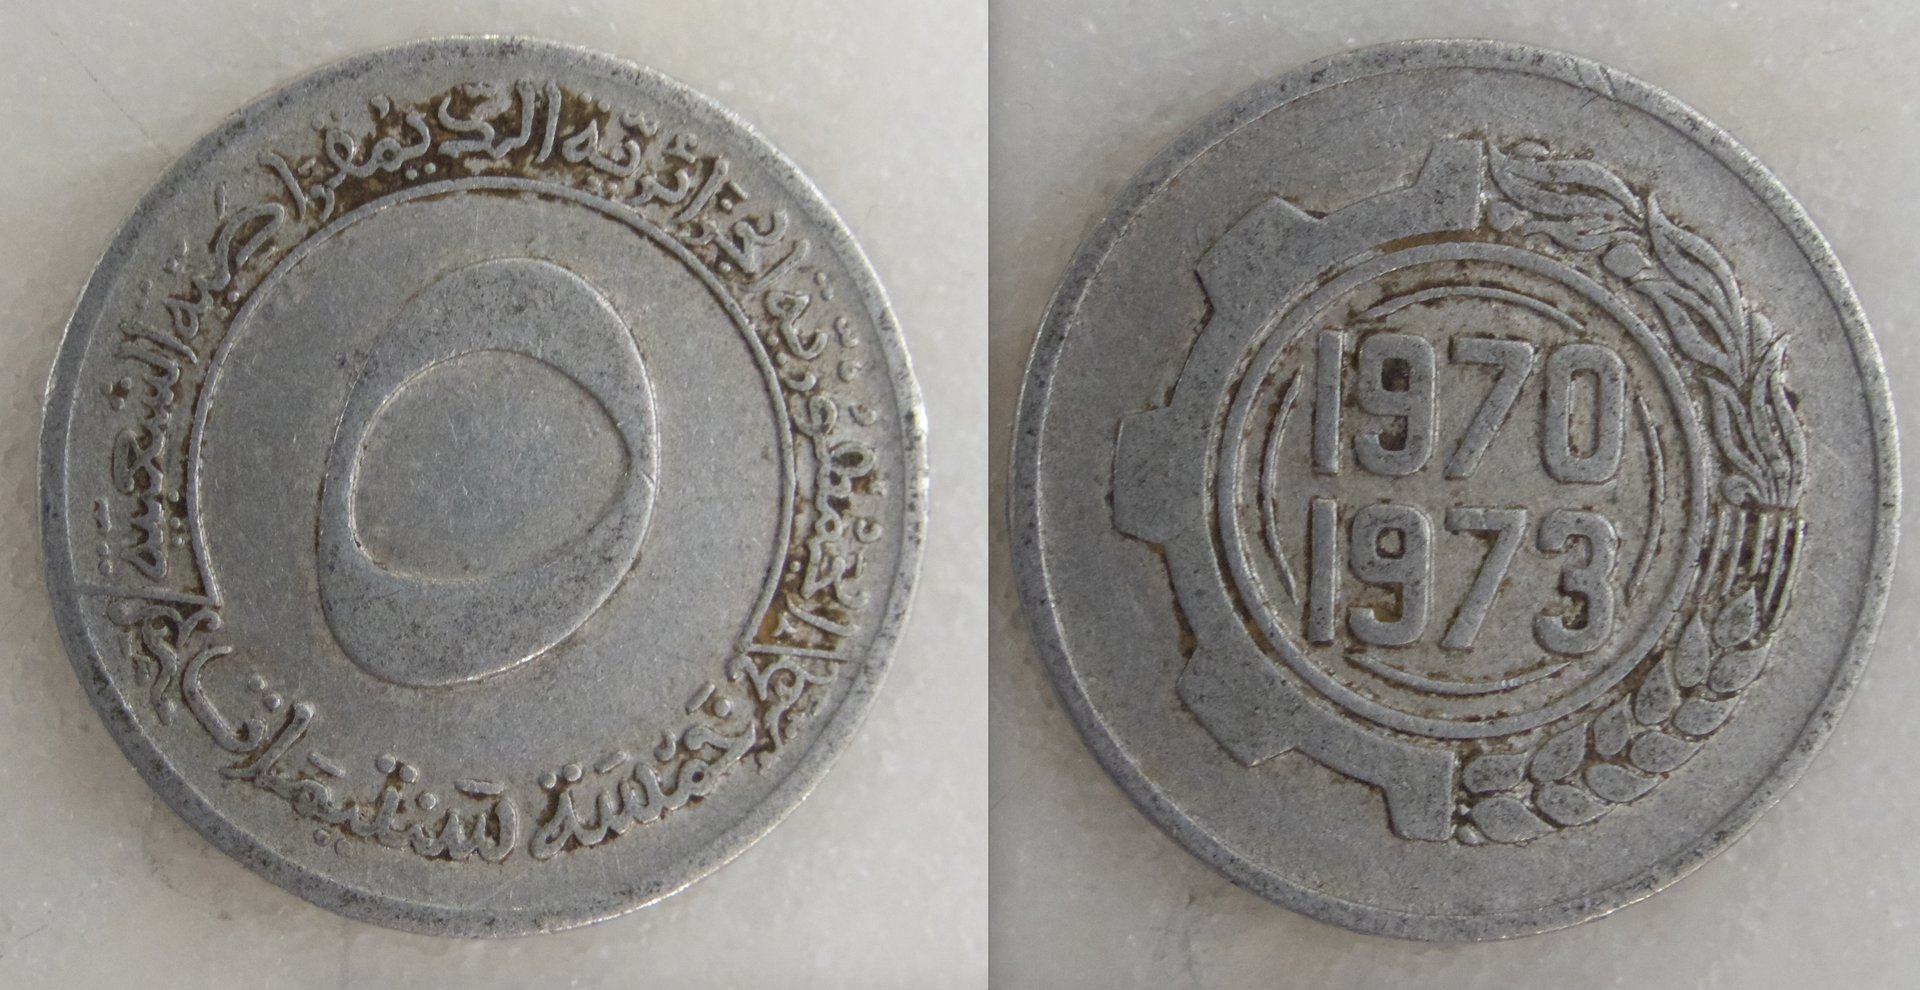 Algeria 5 centimes 1970 copy.jpeg